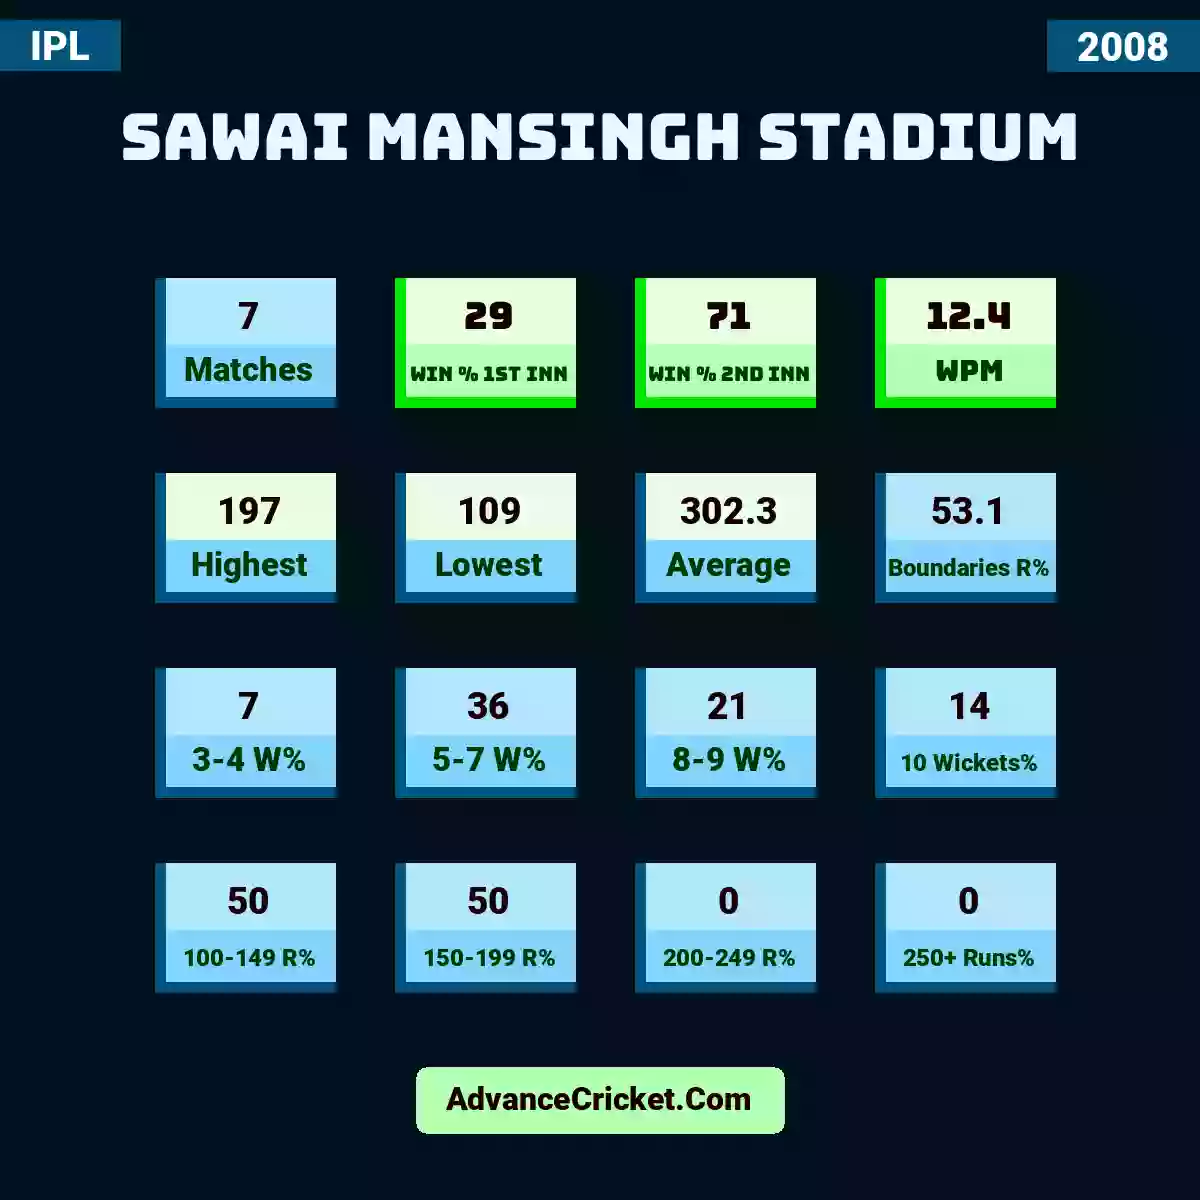 Image showing Sawai Mansingh Stadium with Matches: 7, Win % 1st Inn: 29, Win % 2nd Inn: 71, WPM: 12.4, Highest: 197, Lowest: 109, Average: 302.3, Boundaries R%: 53.1, 3-4 W%: 7, 5-7 W%: 36, 8-9 W%: 21, 10 Wickets%: 14, 100-149 R%: 50, 150-199 R%: 50, 200-249 R%: 0, 250+ Runs%: 0.